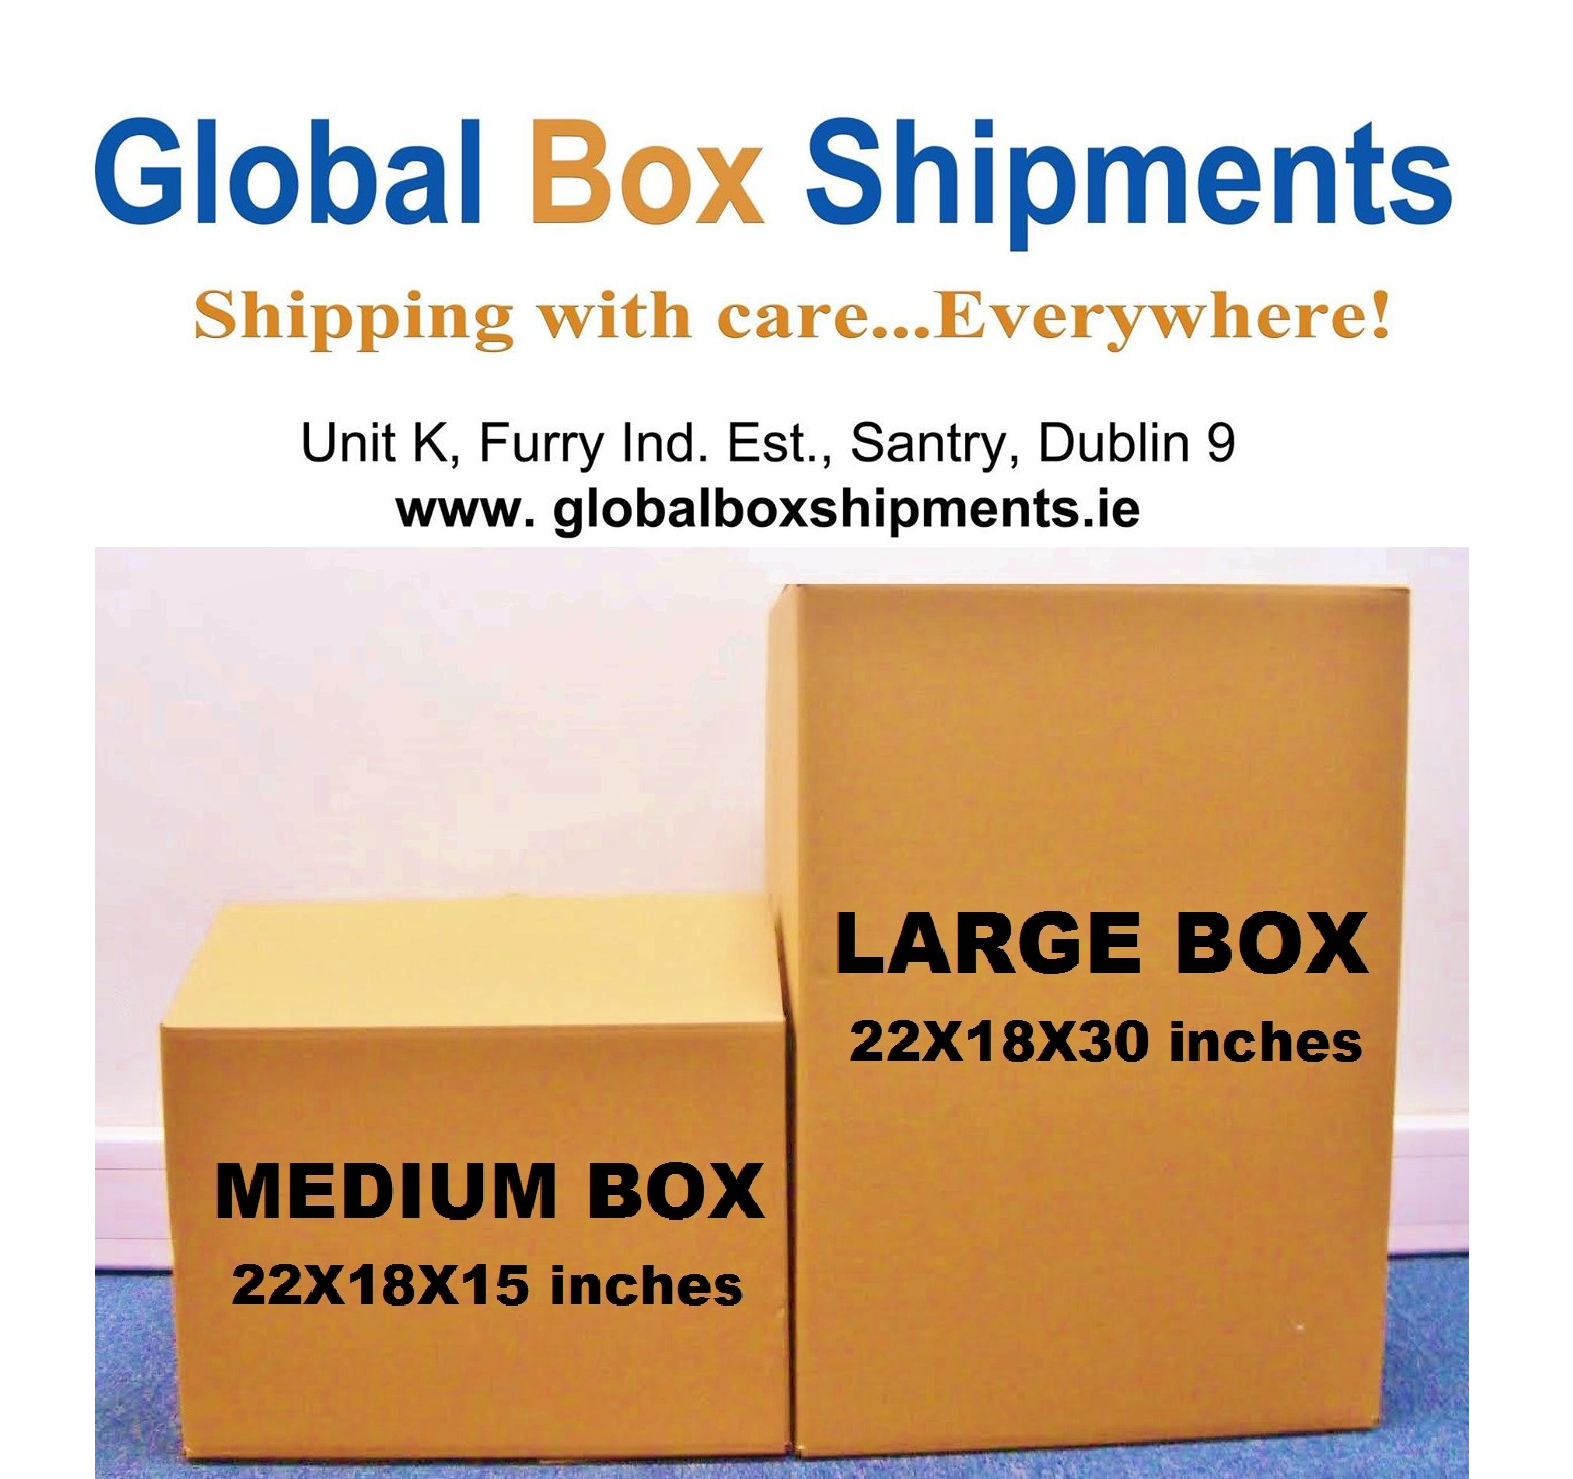 Forex cargo box sizes